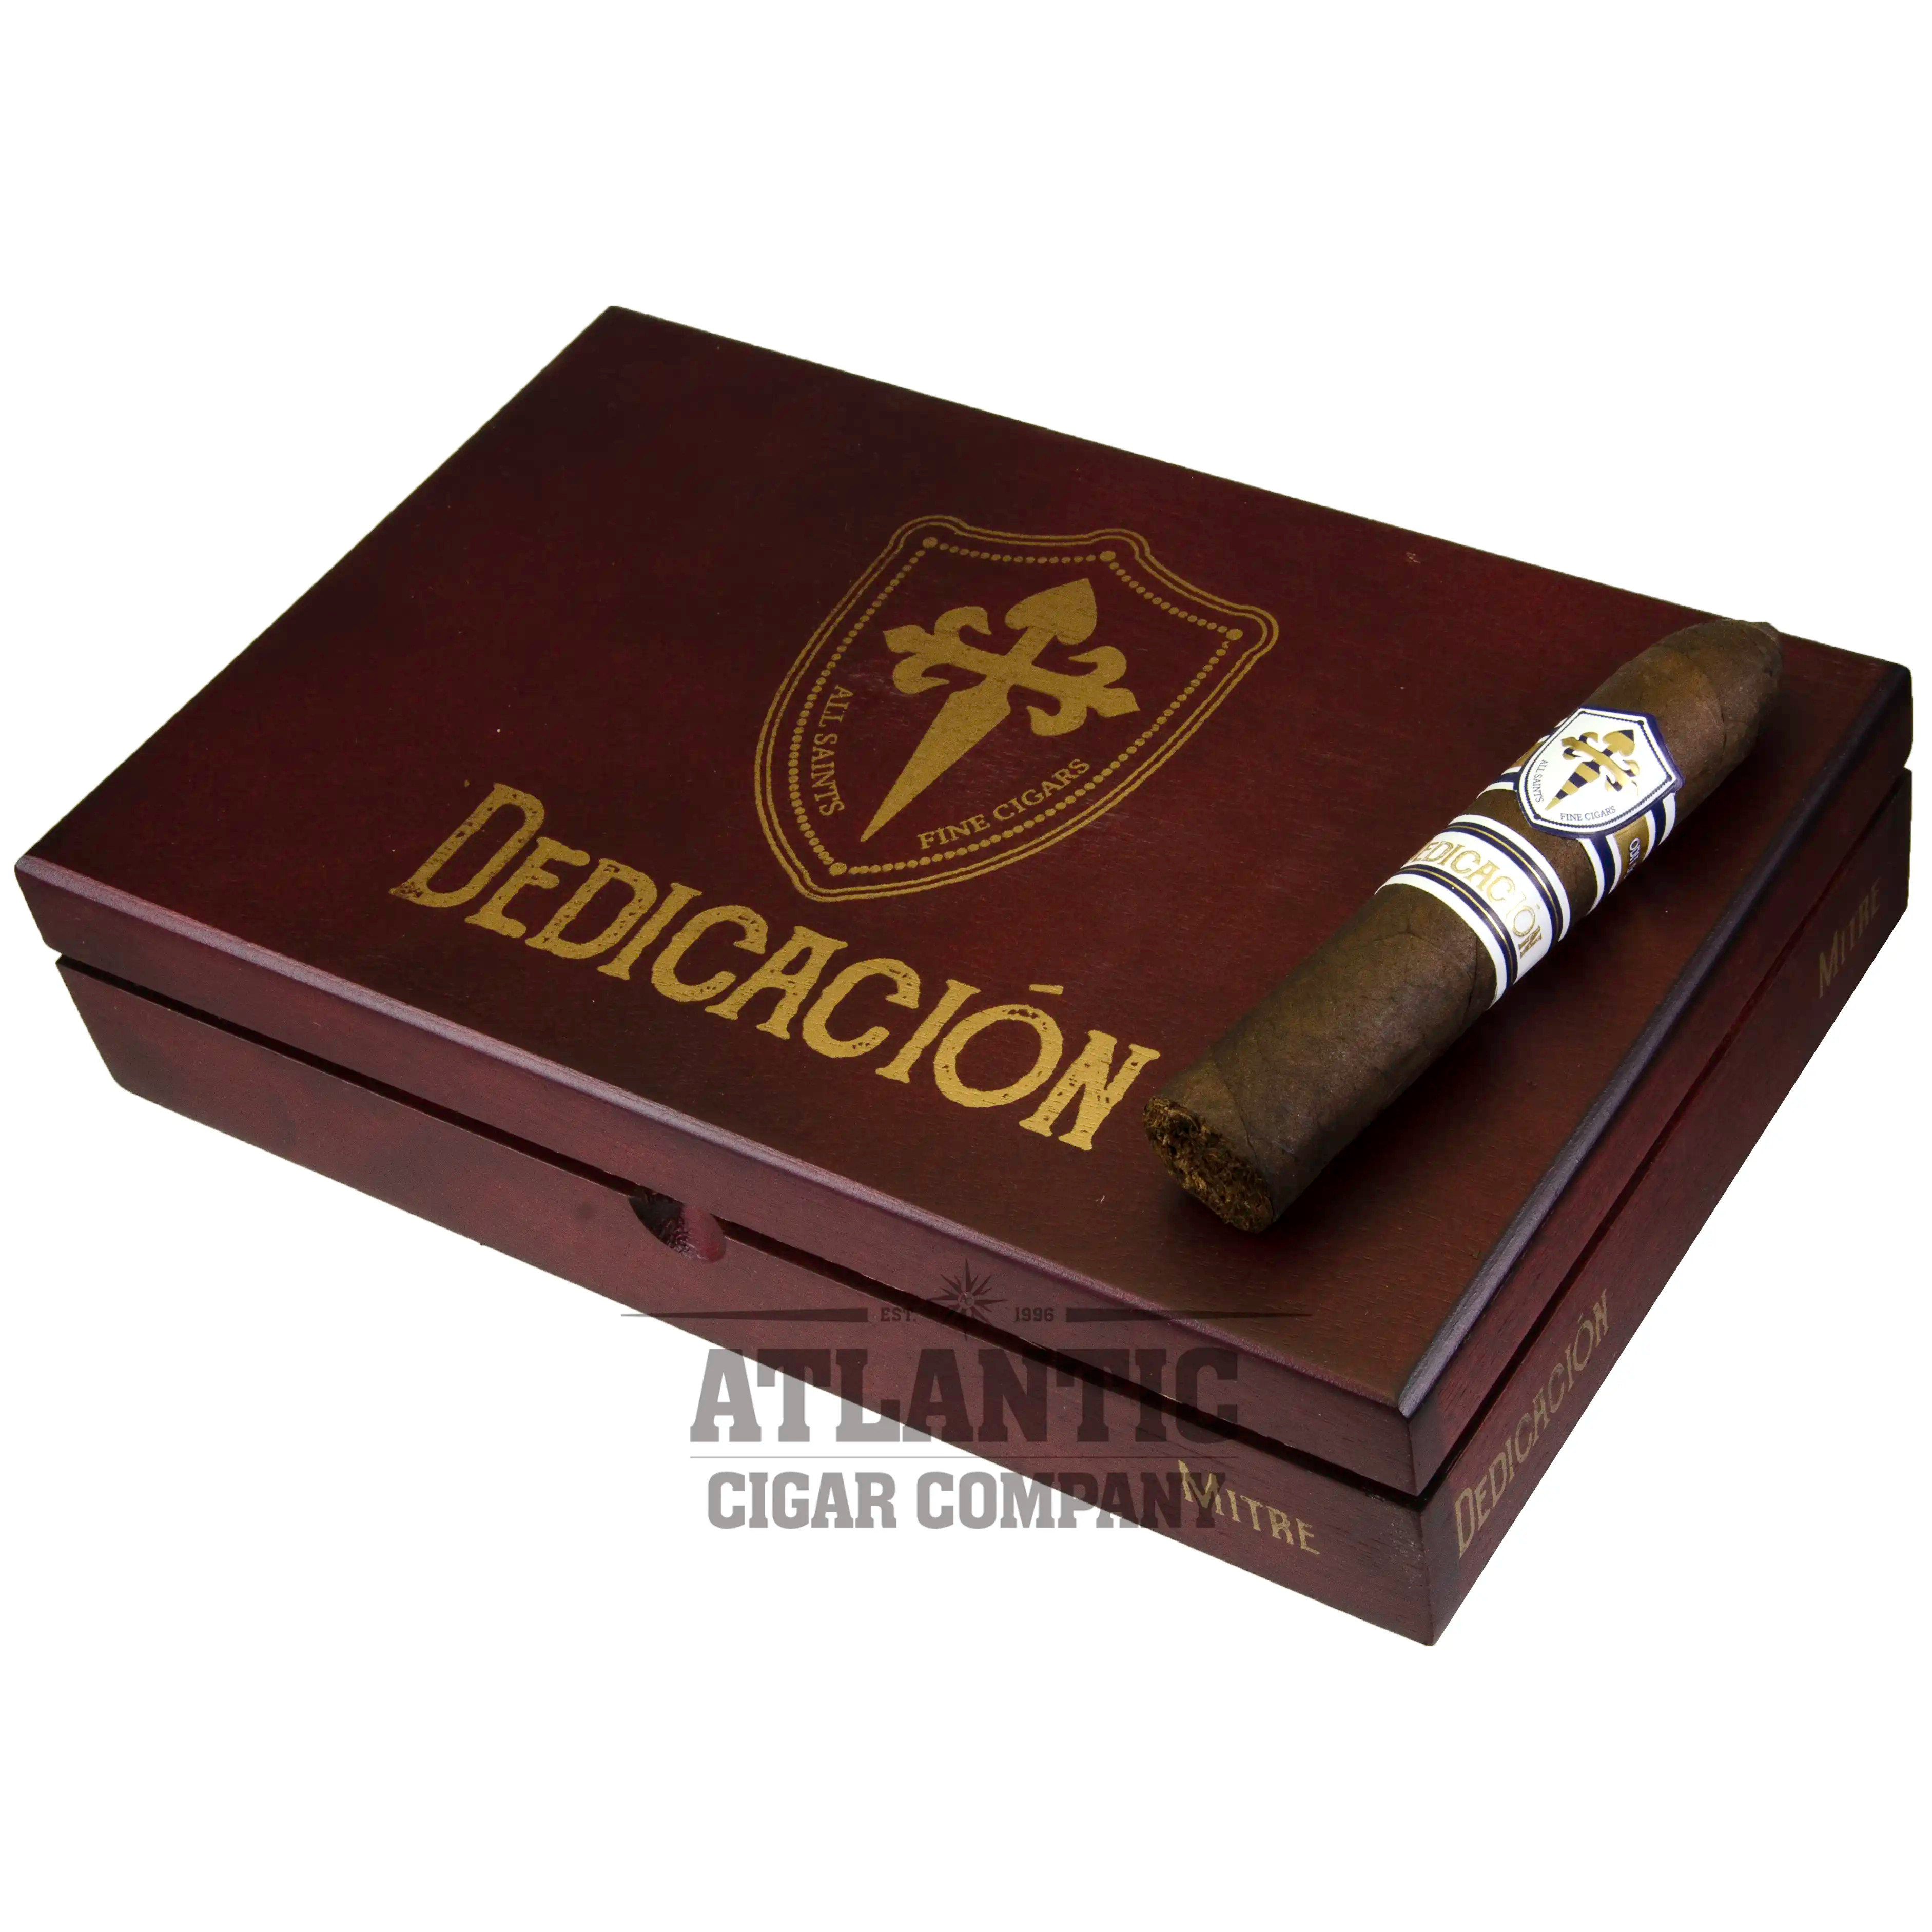 Round Torpedo Saints Mitre (5x54) Cigars Dedicacion All